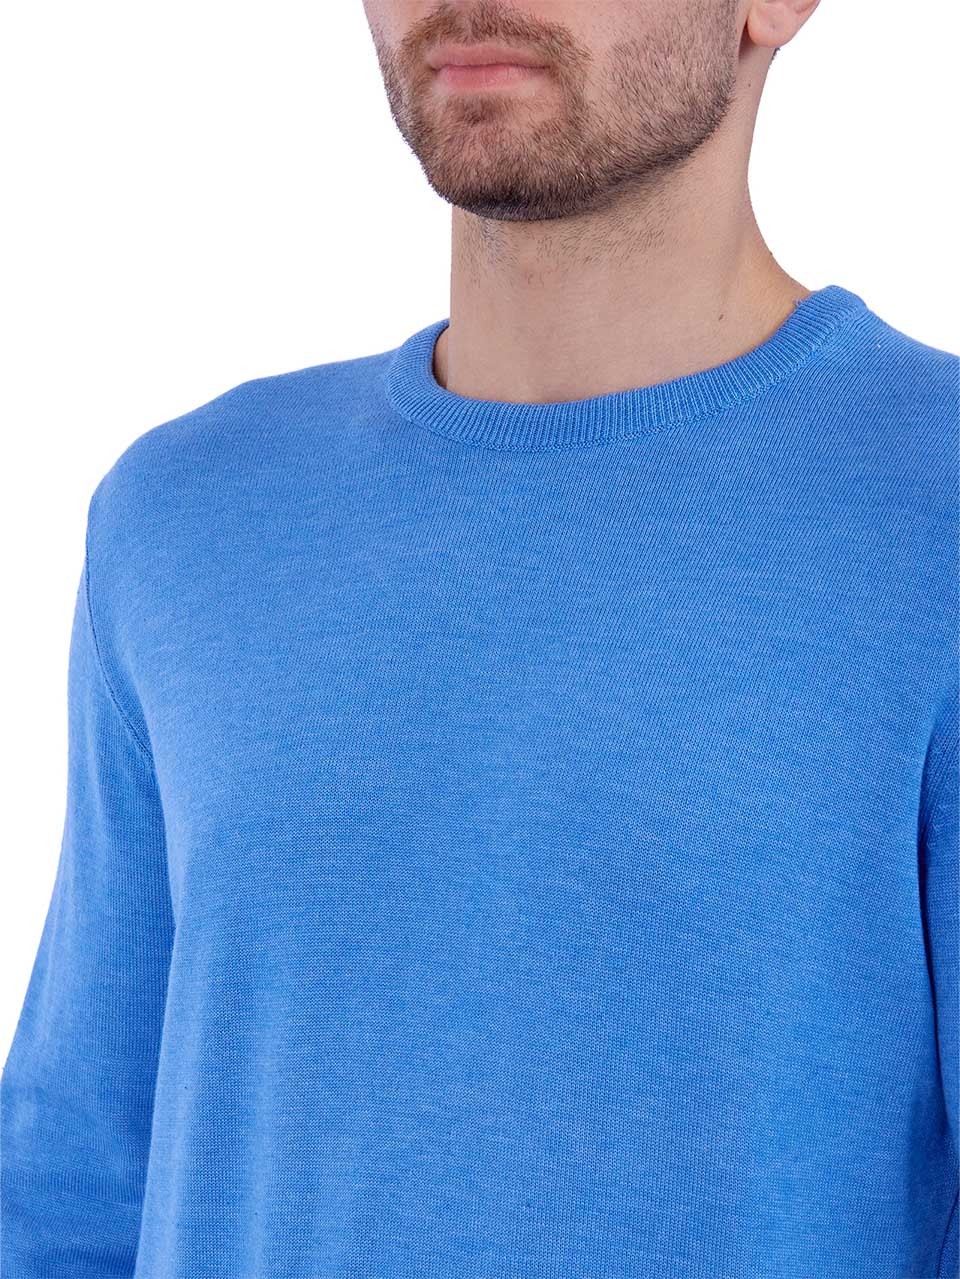 Crew Neck KnitWear Sweater Light Blue